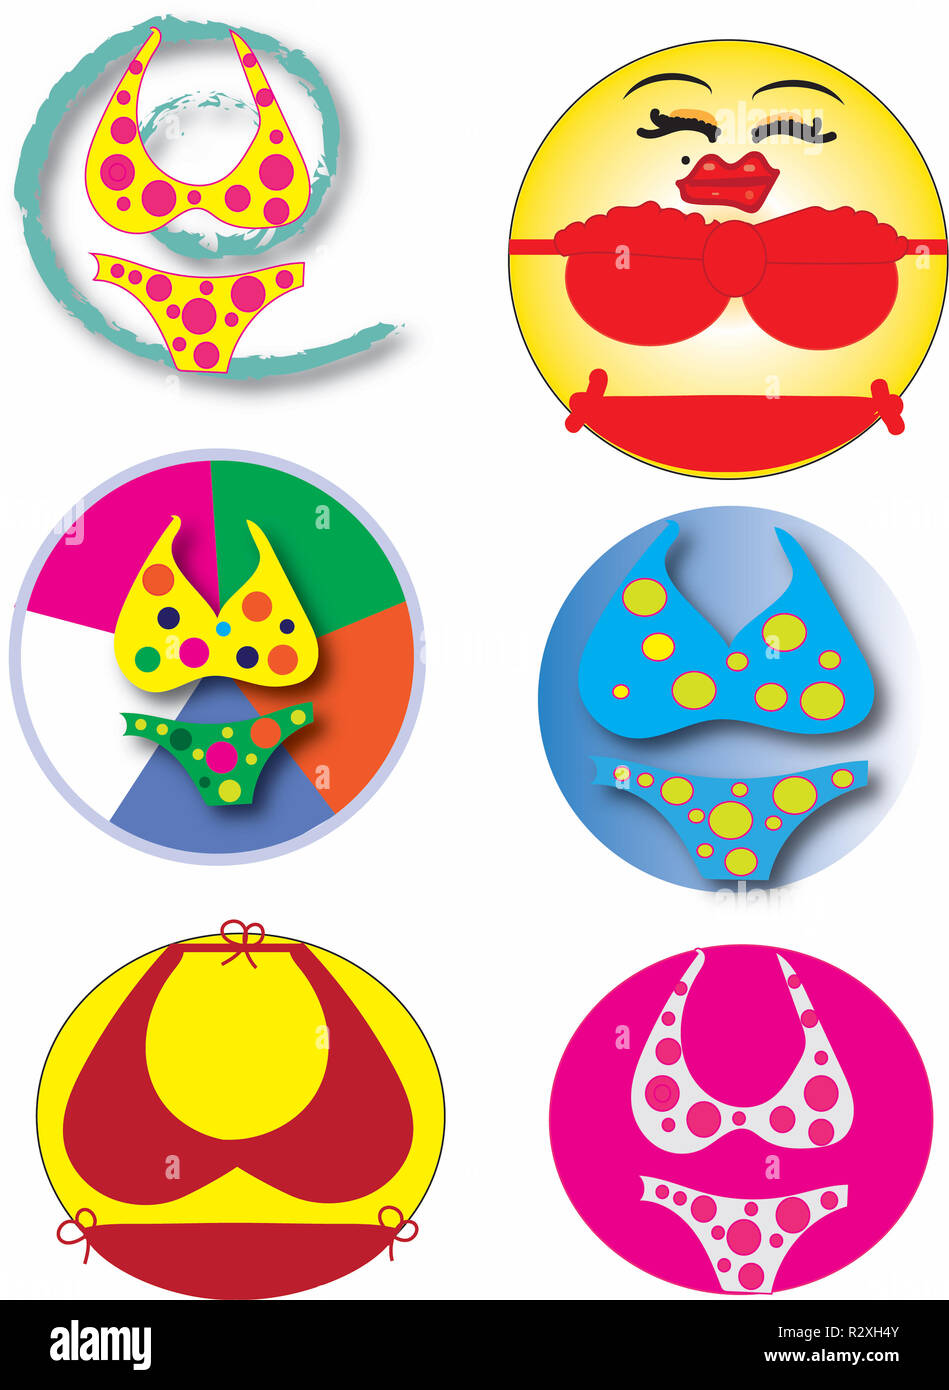 Collection of bikini emojis Stock Photo - Alamy